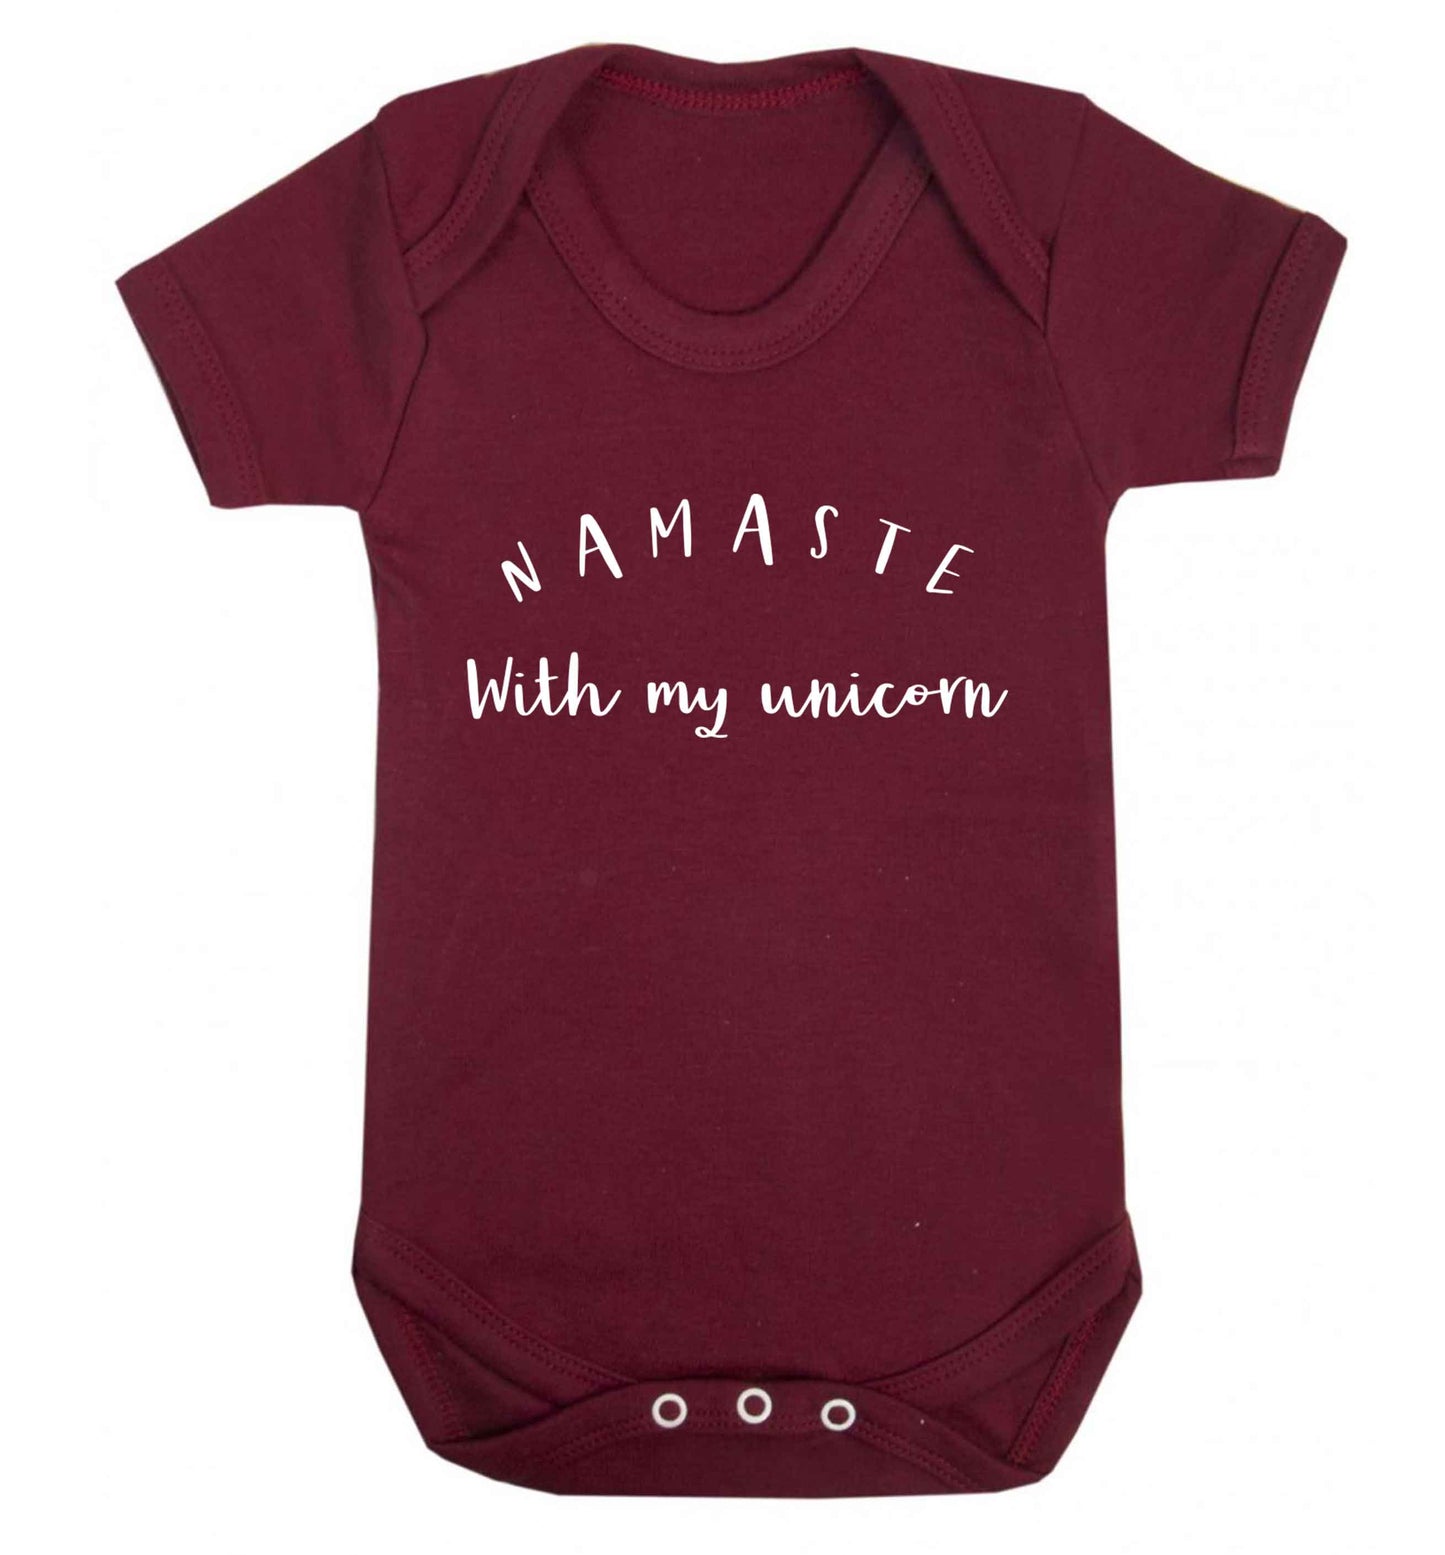 Namaste with my unicorn Baby Vest maroon 18-24 months